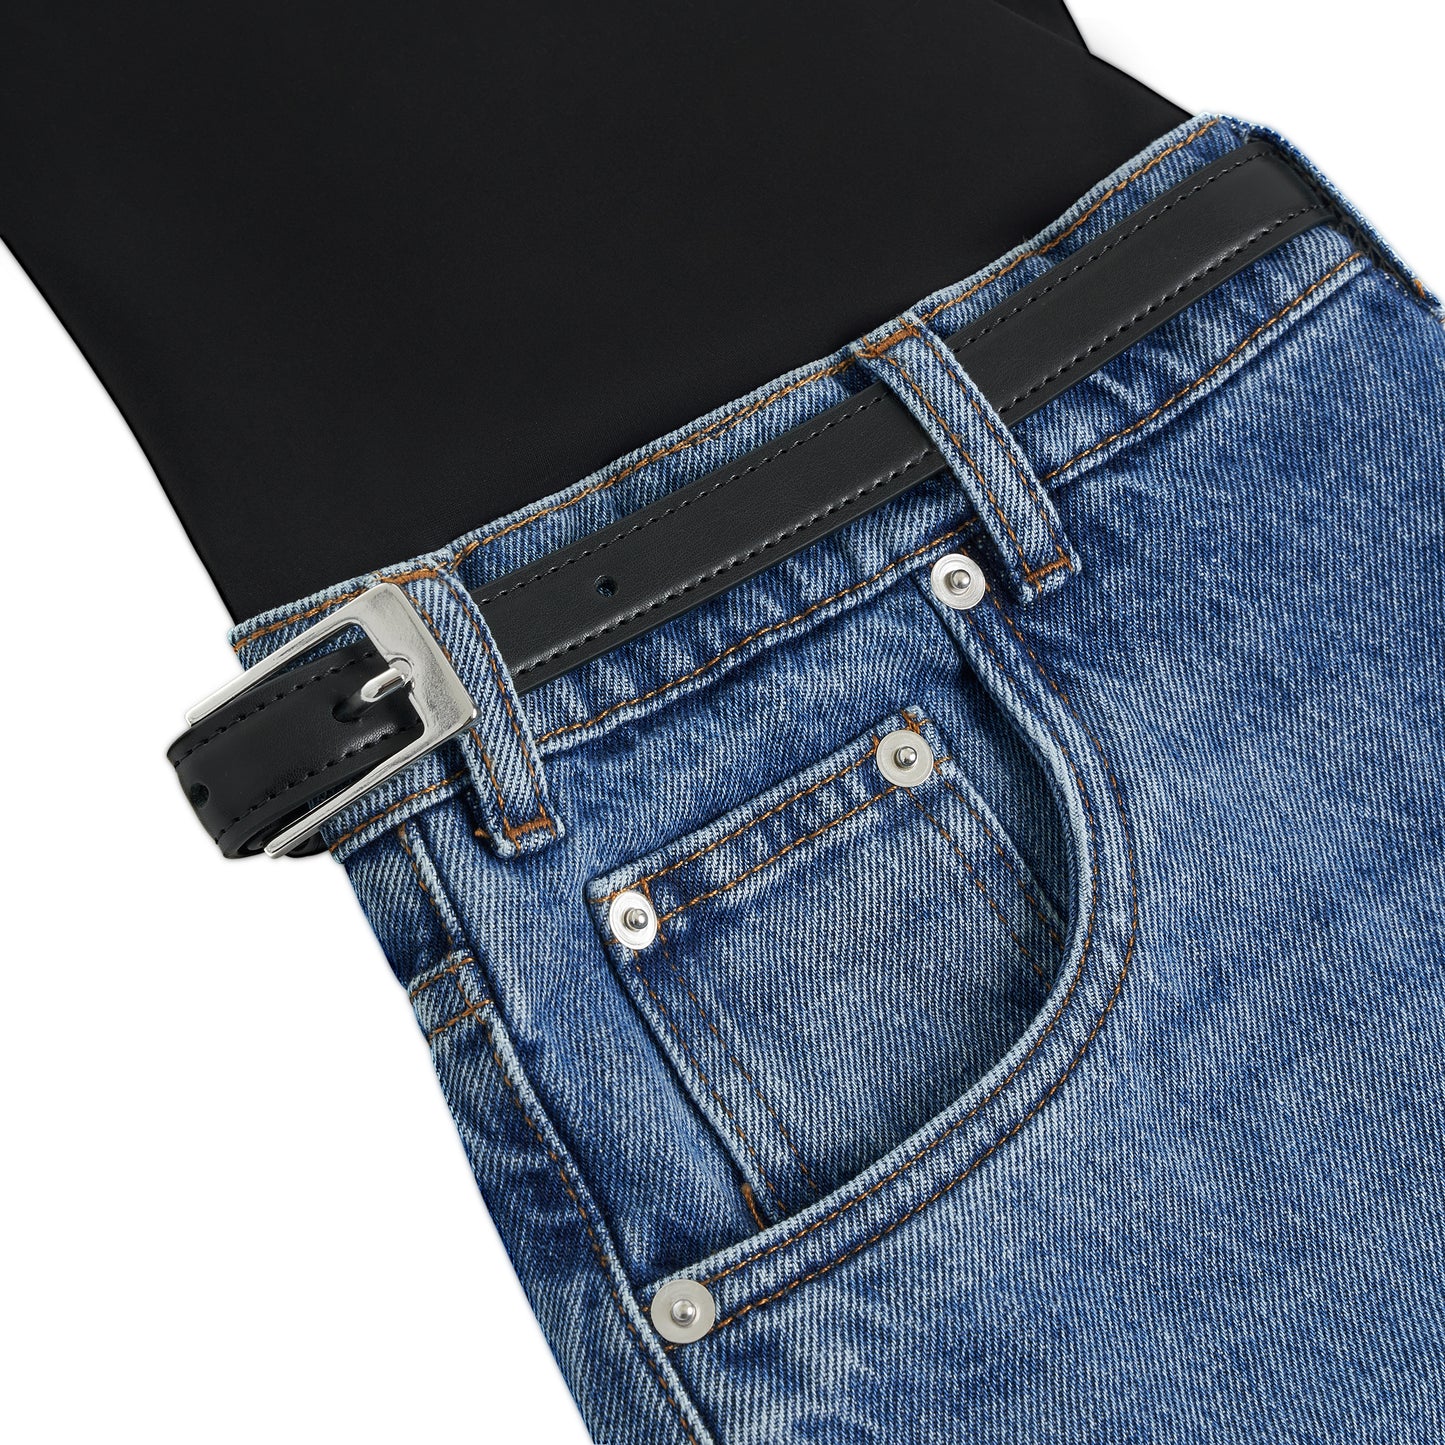 Hybrid Denim Pants in Black/Blue